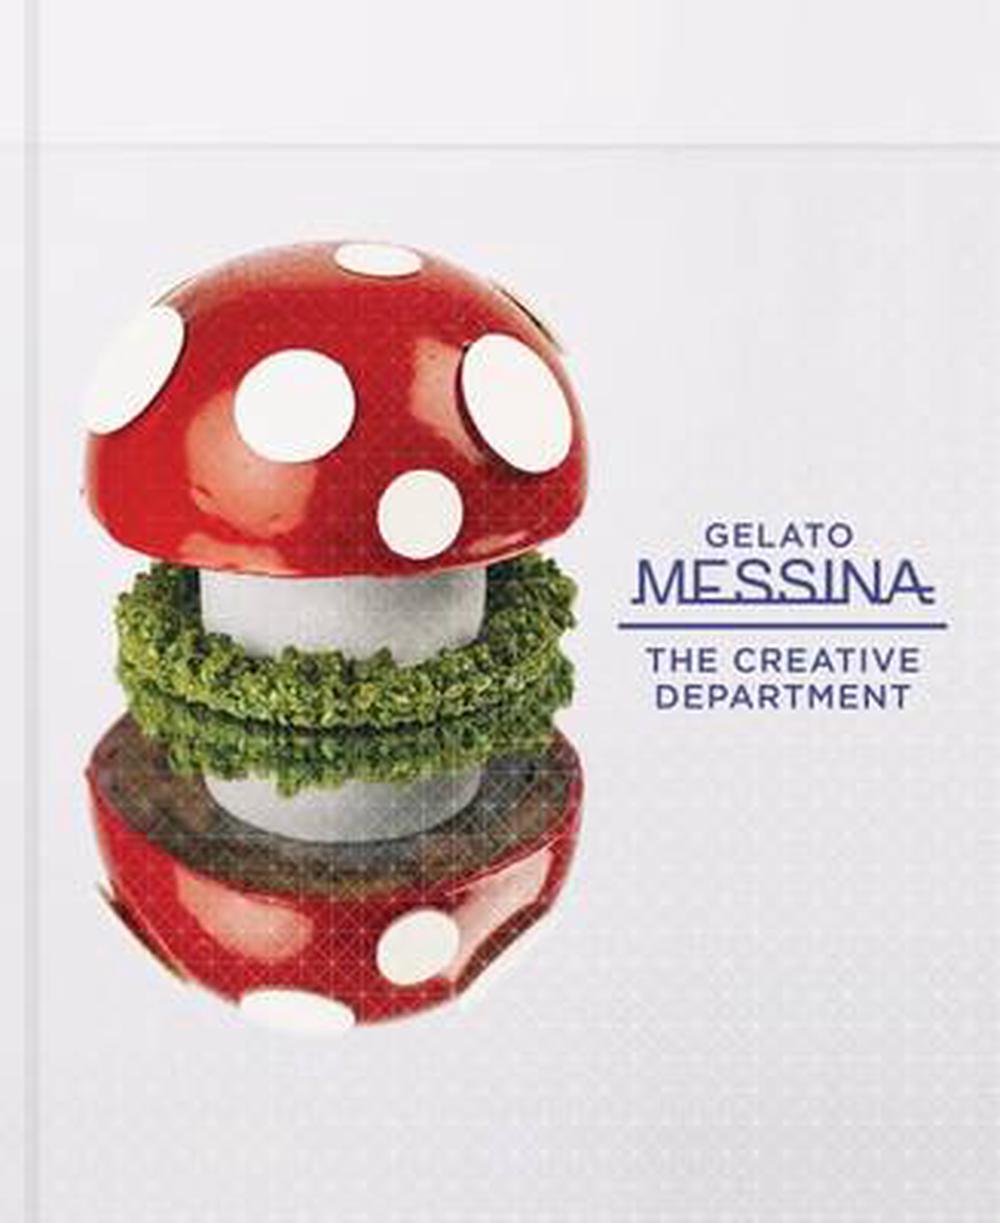 gelato messina the creative department